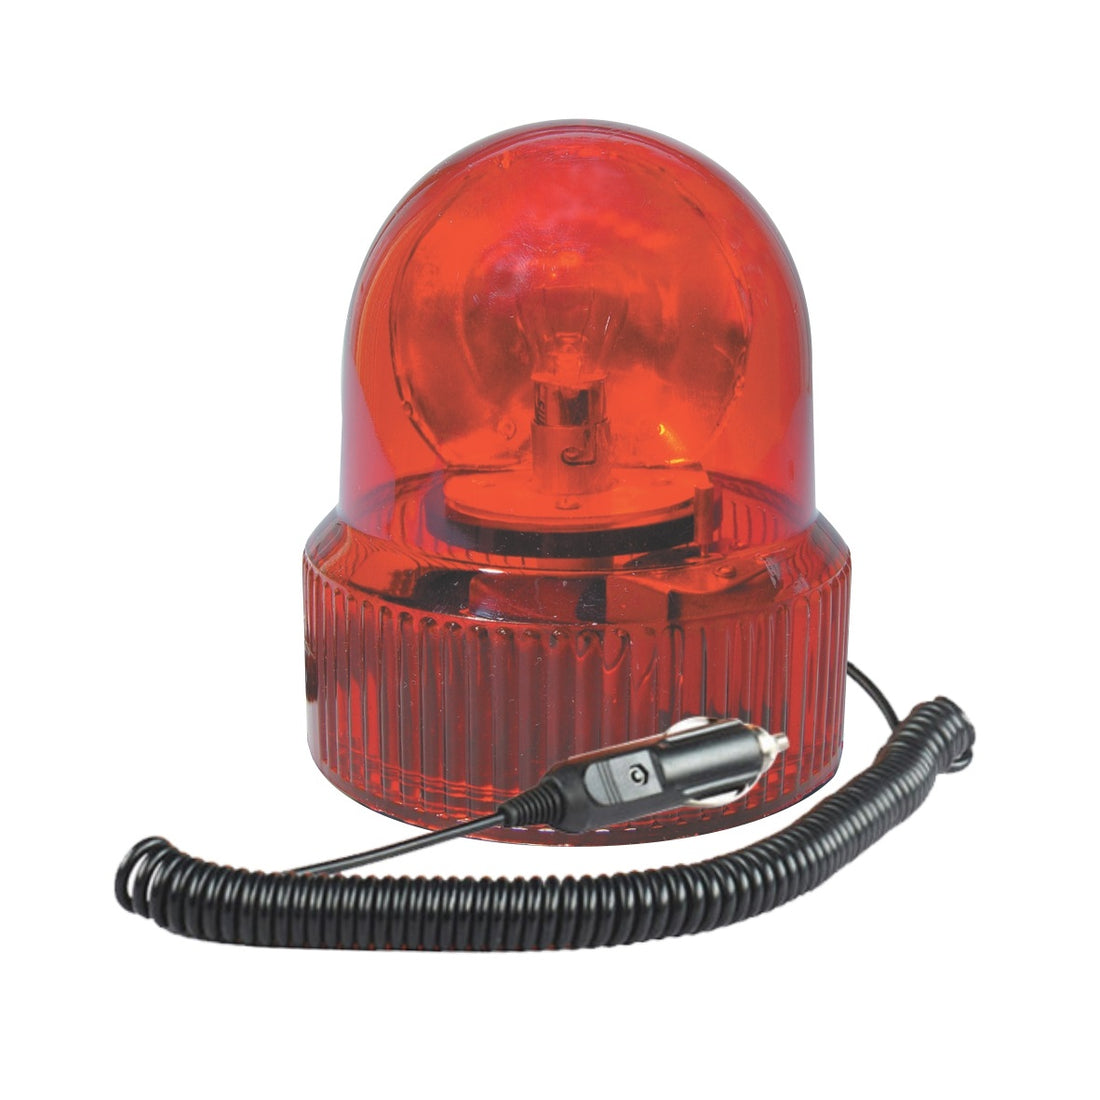 iota Beacon Light BL162 Industrial Revolving Warning and Rotate Light Signal Tower Lamp